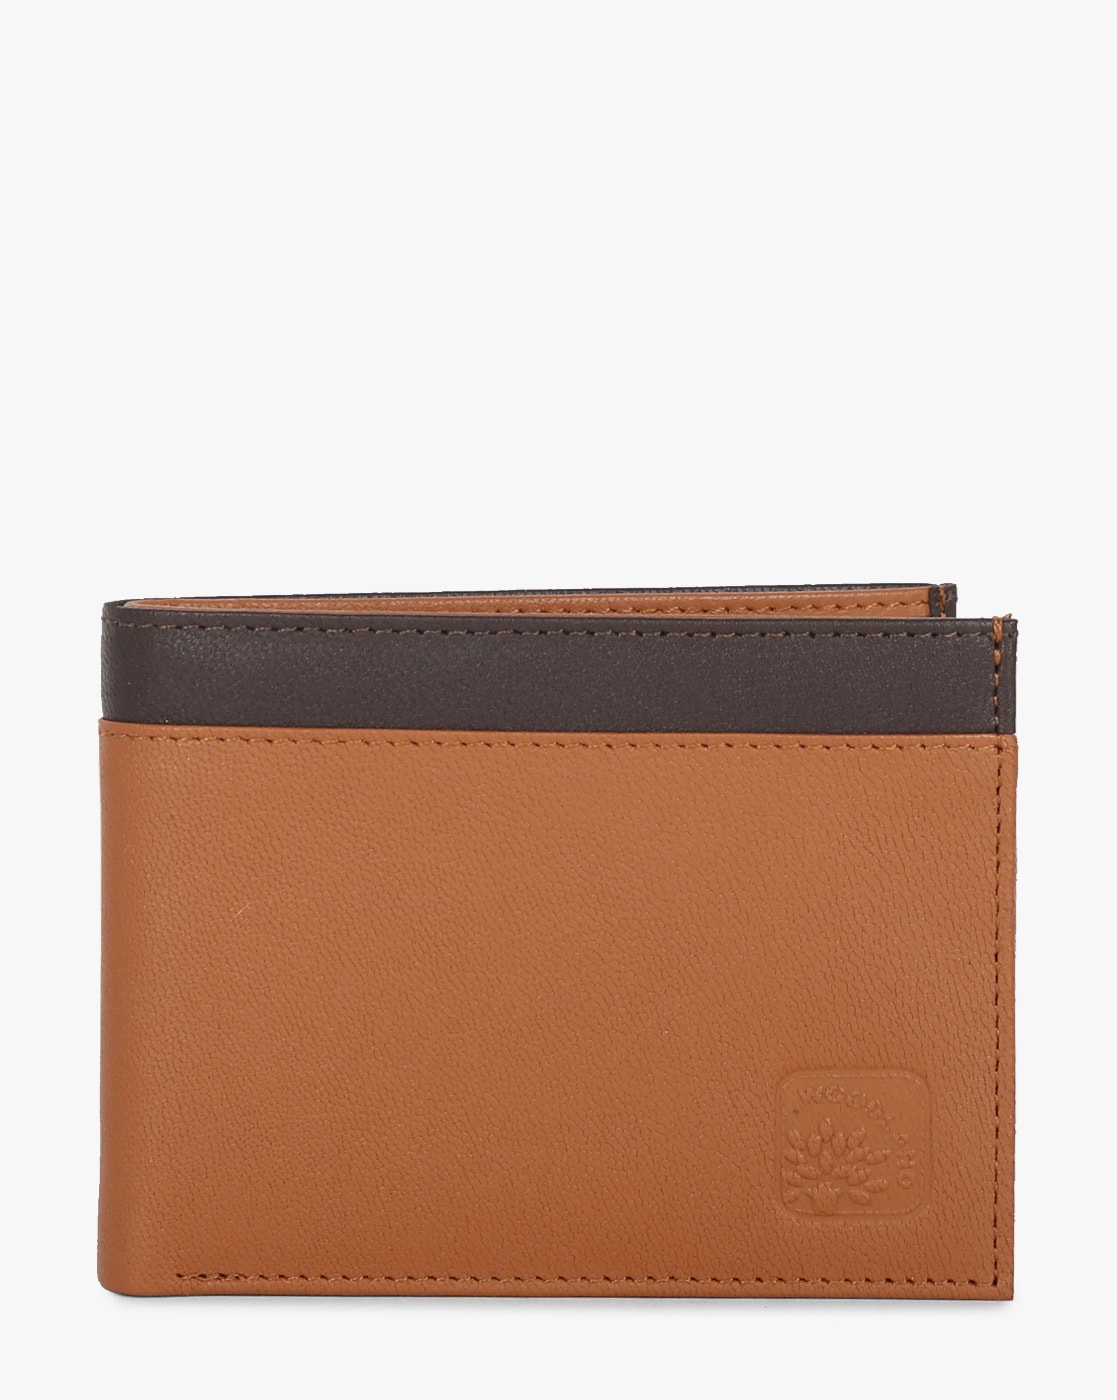 Buy Woodland Wallet for Men | Copied Men Wallet | Genuine Leather Wallet at  Amazon.in